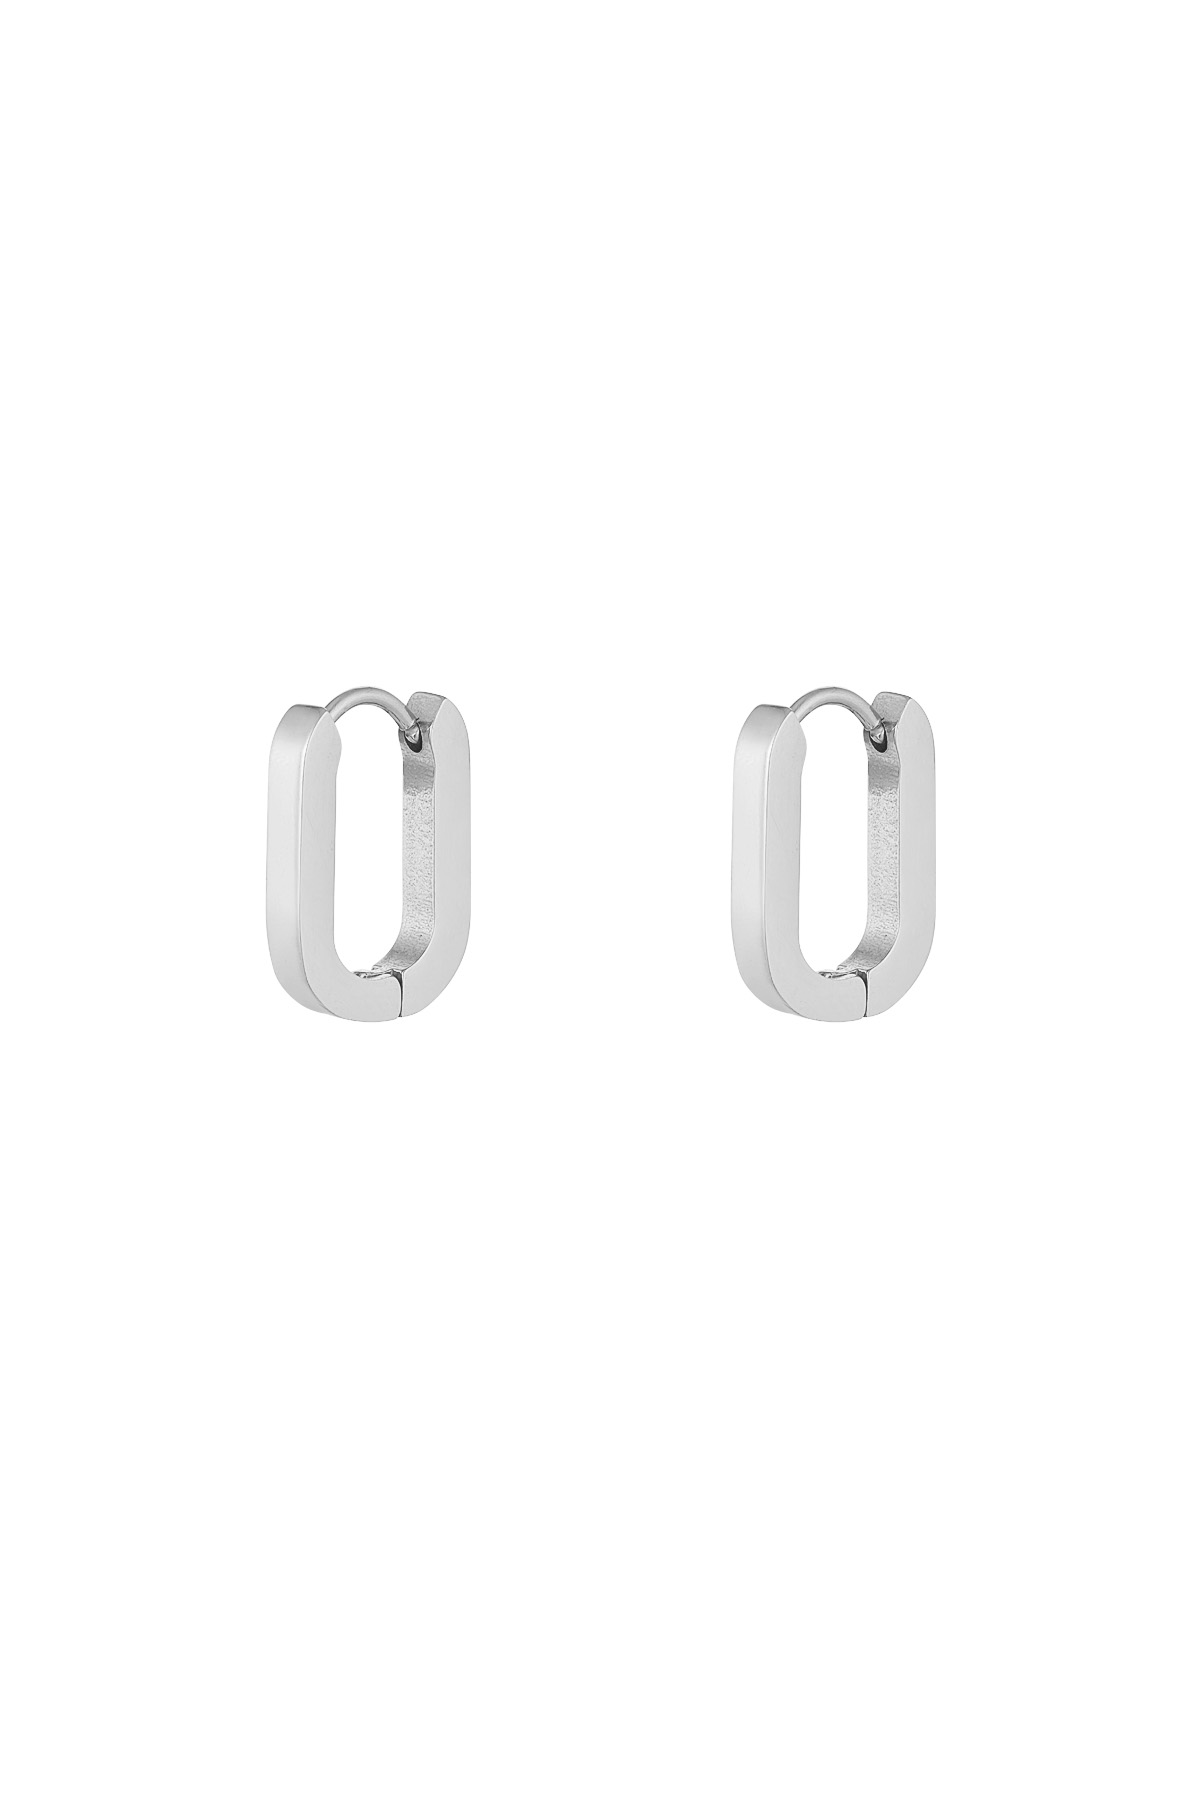 Basic oval earrings small - silver 